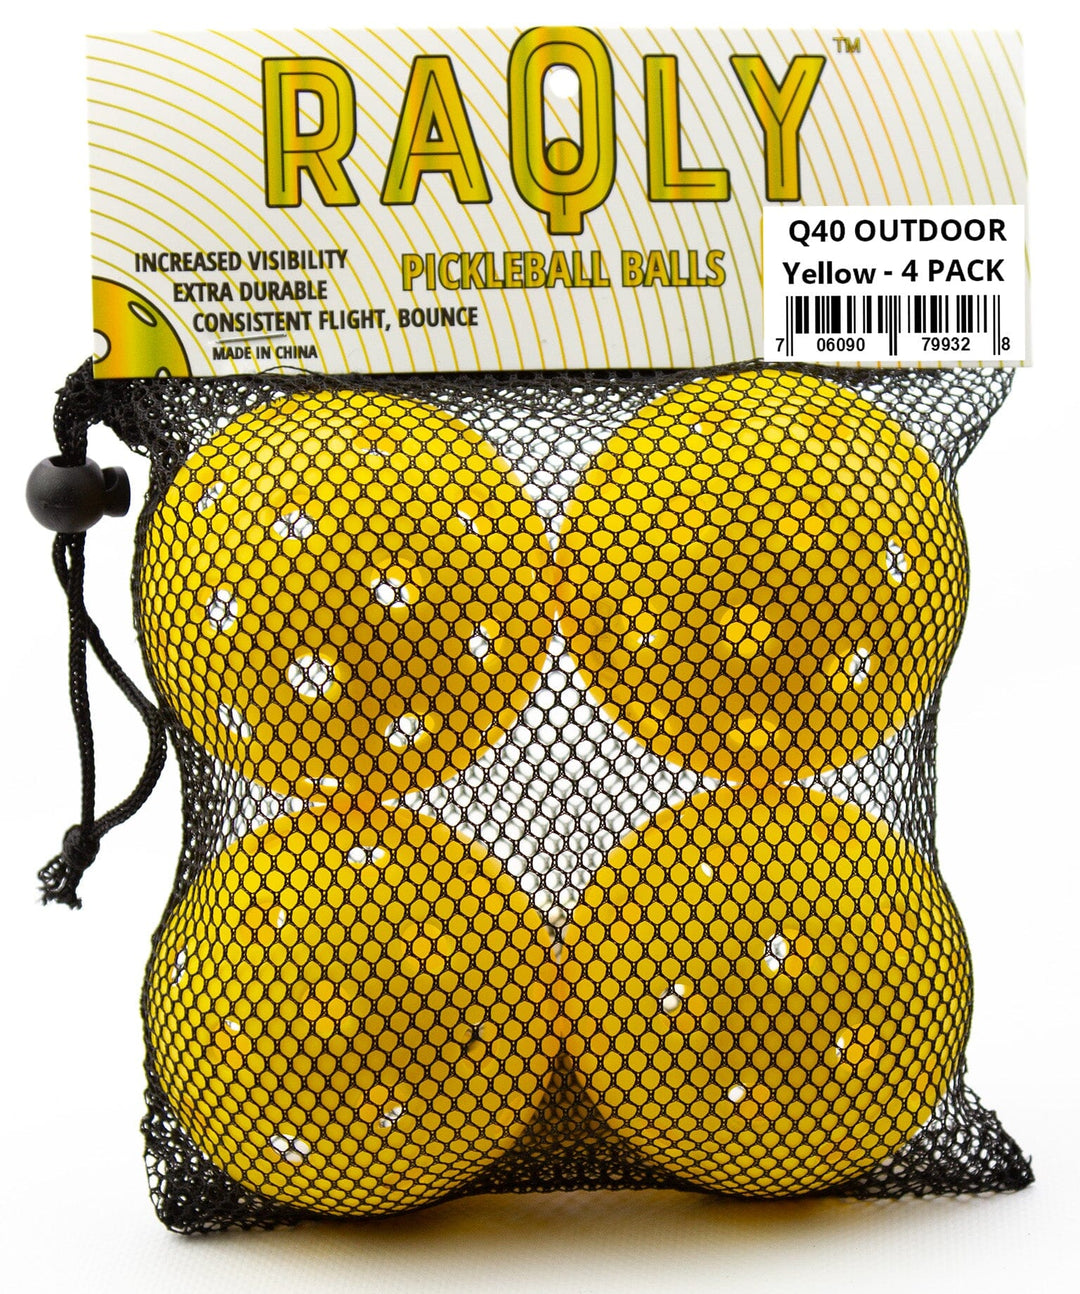 RAQLY Pickleball Q40 Outdoor Ball Pickleball Balls RAQLY Yellow 4-pack 